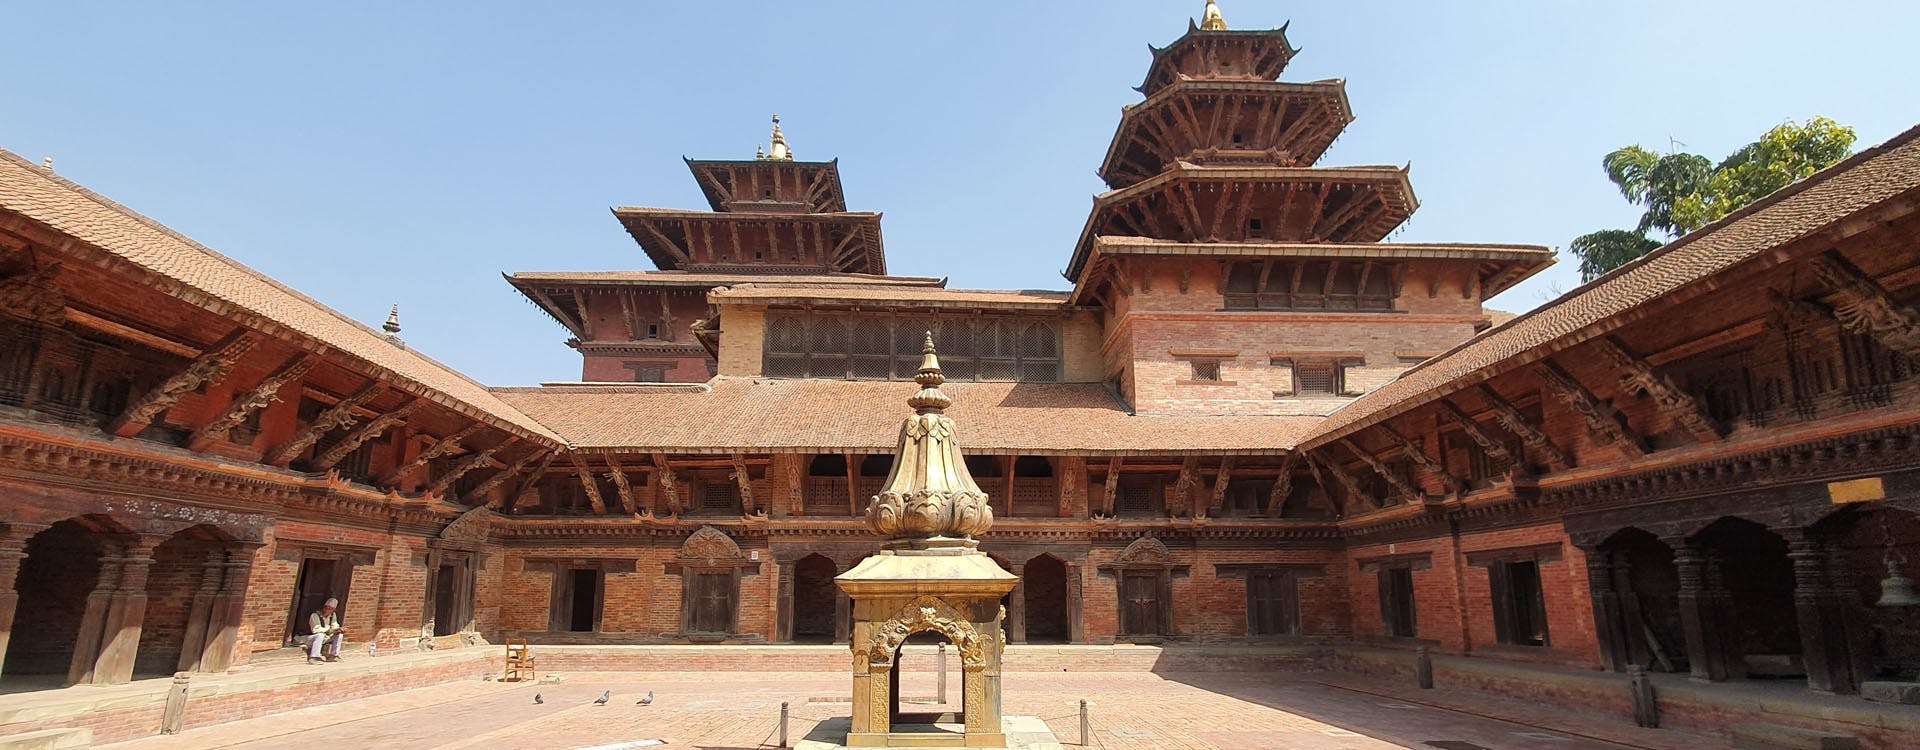 Luxury Holidays to Nepal